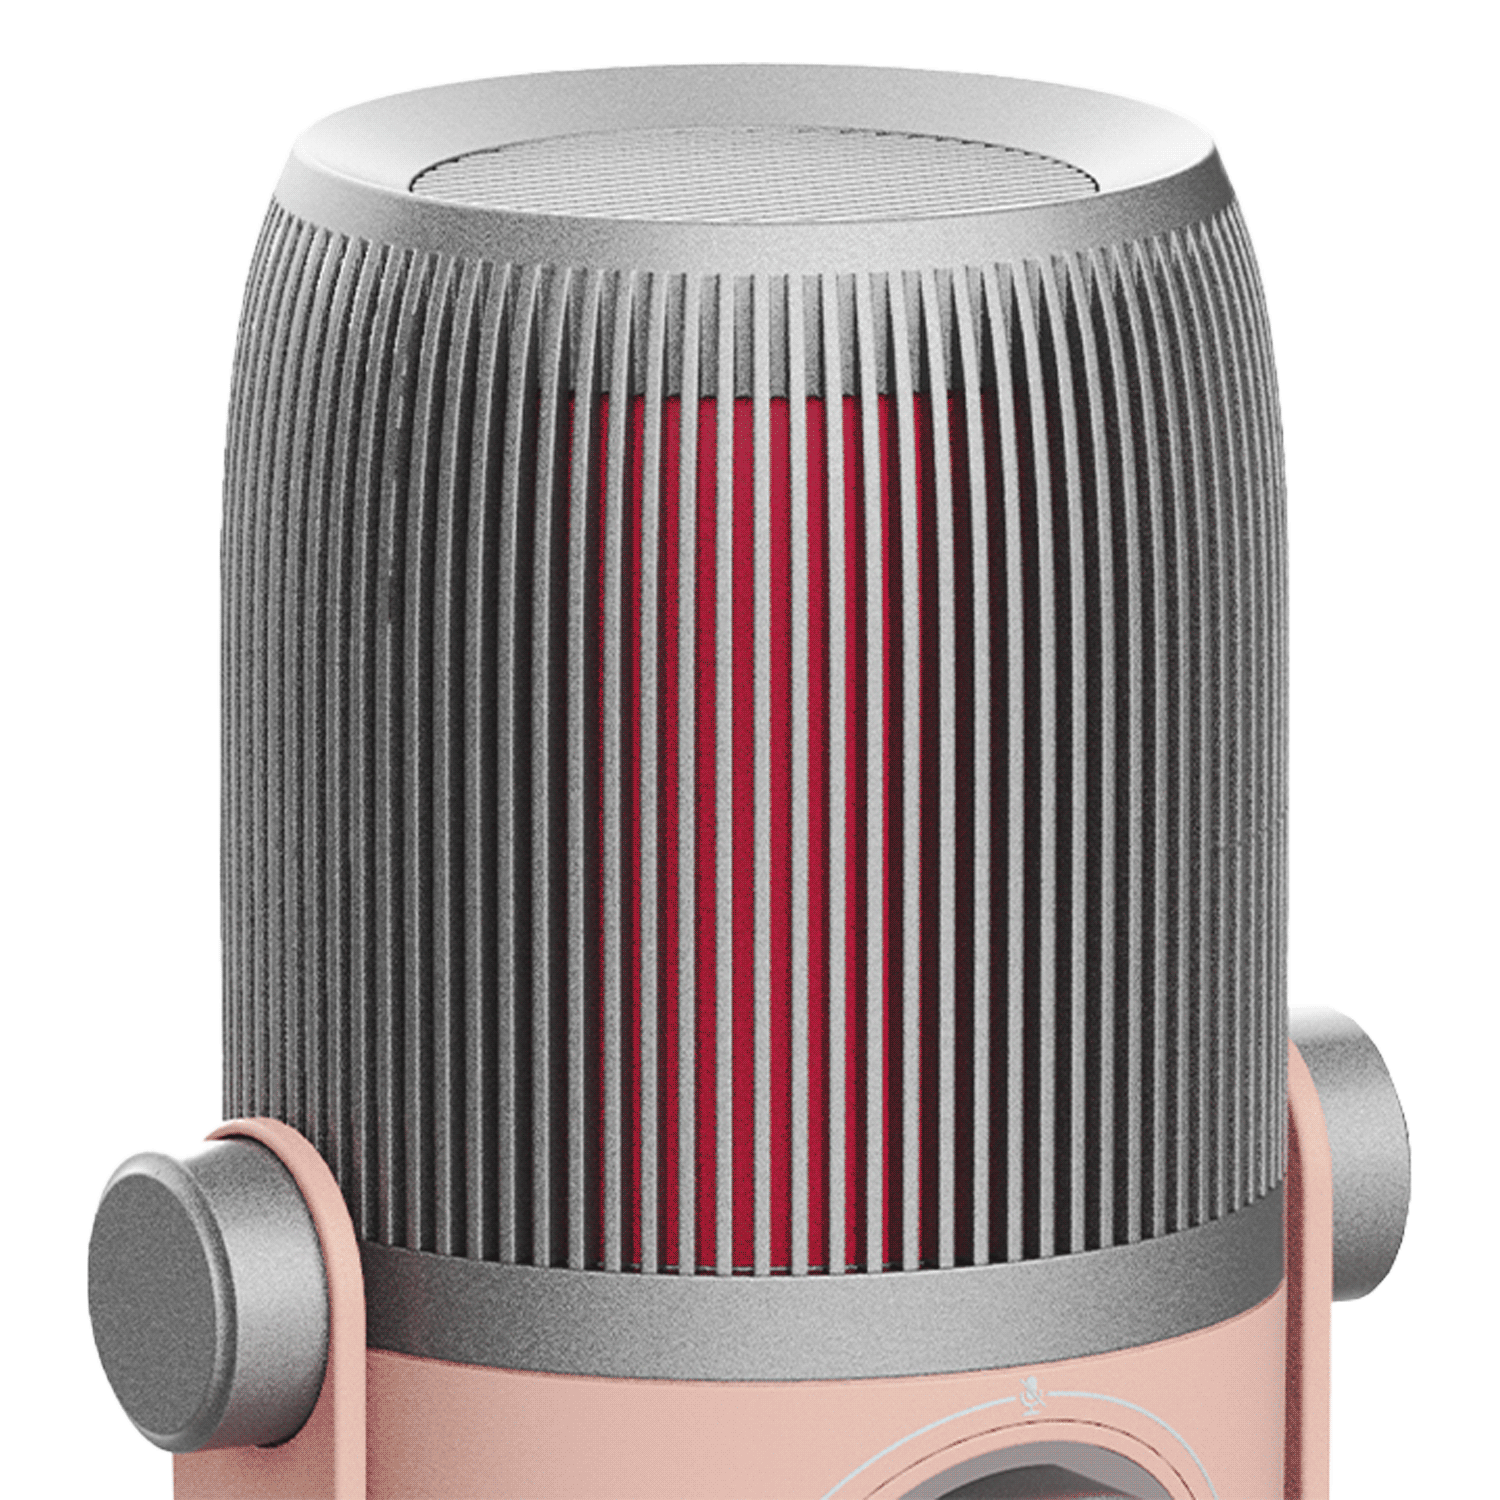 Microfone Thronmax Mdrill Rosa Edition -  Rosa